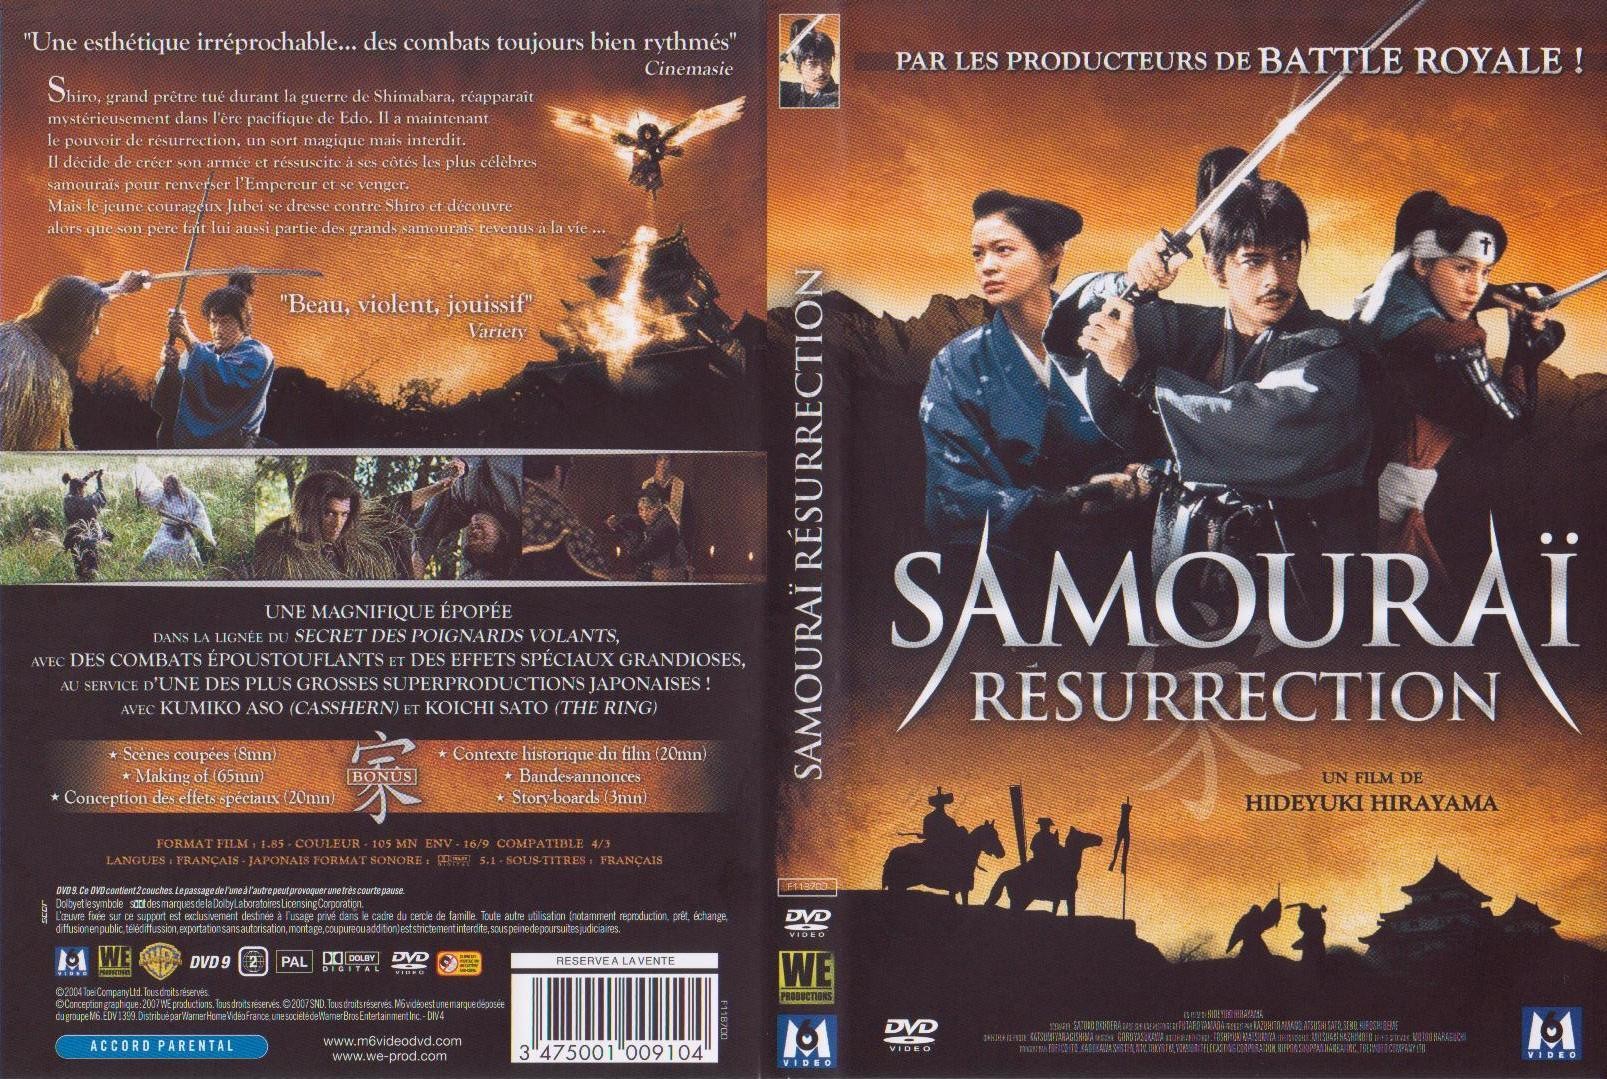 Jaquette DVD Samourai resurrection